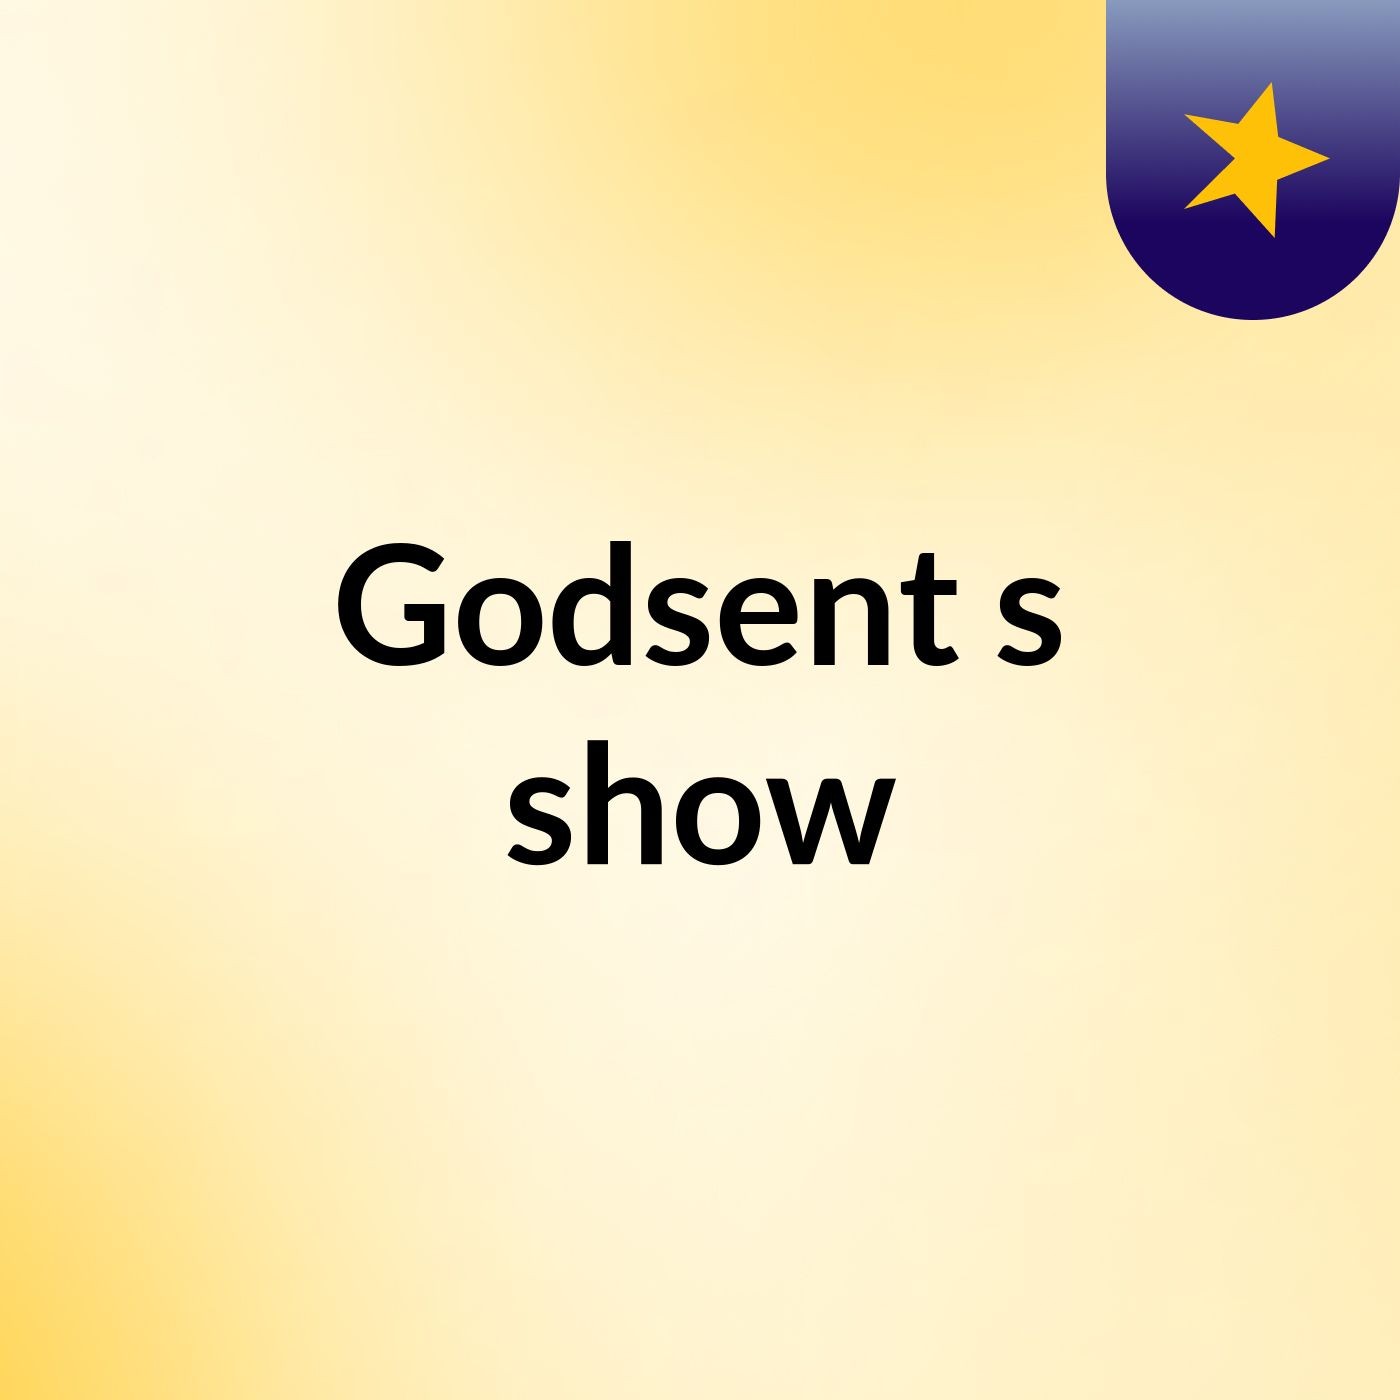 Godsent's show